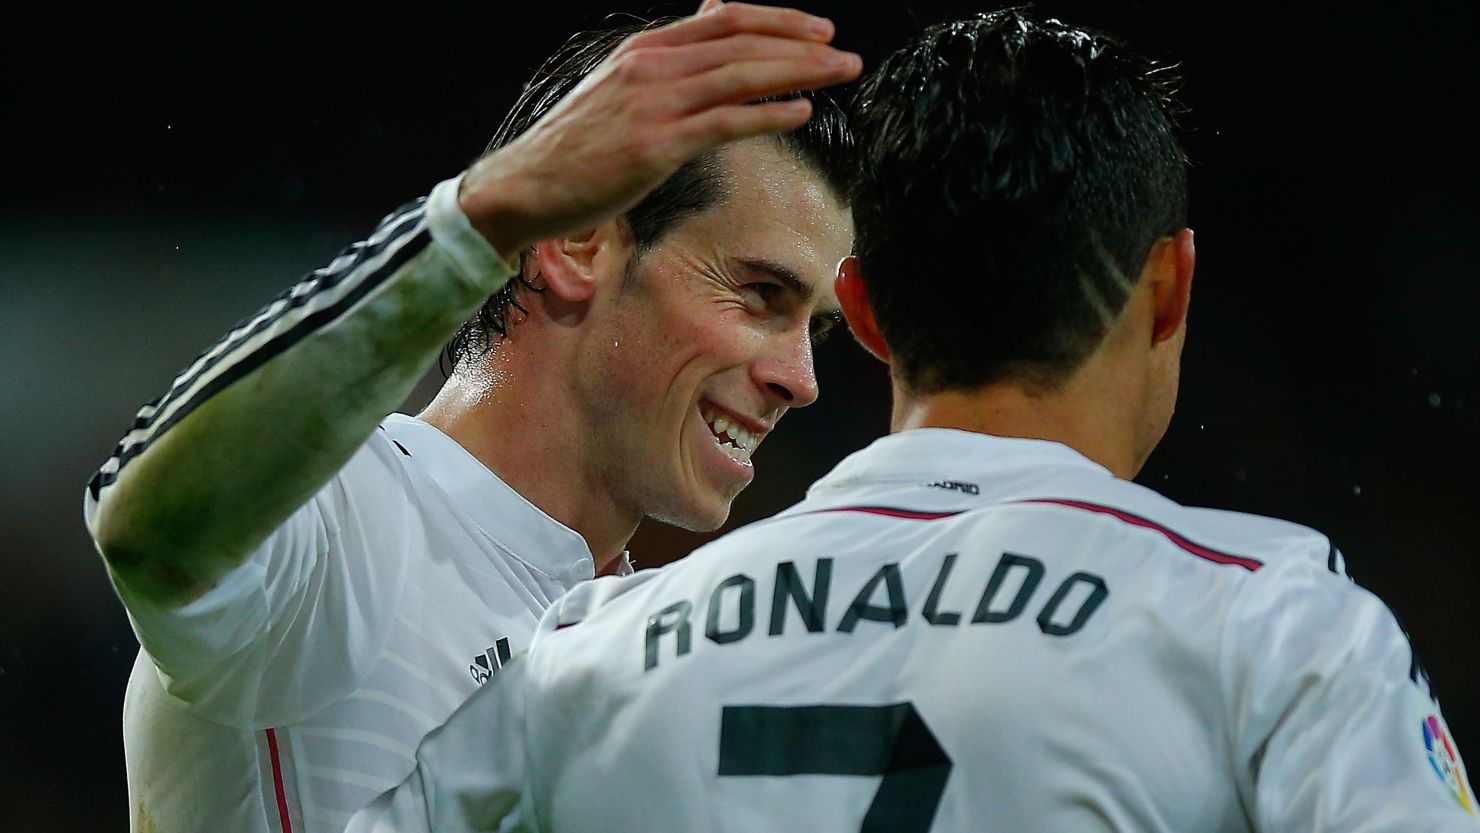 Ronaldo scored his tenth goal in ten games.